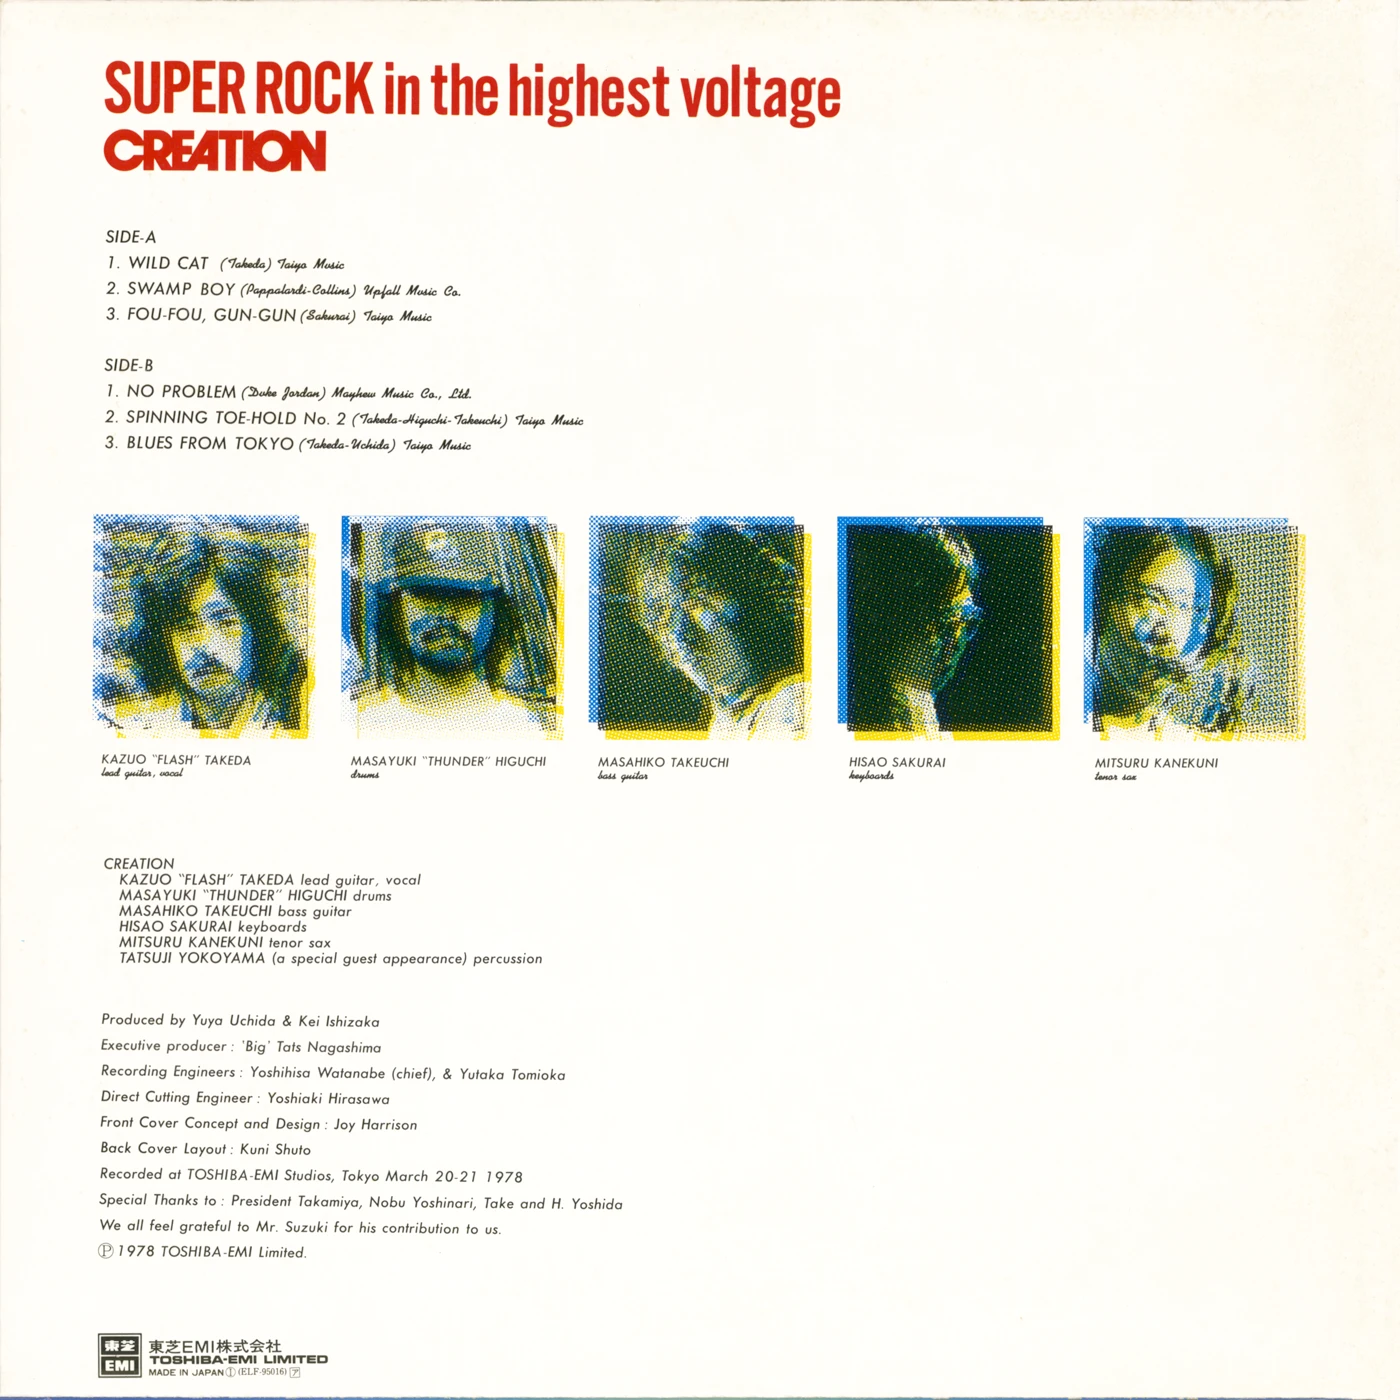 Super Rock In The Highest Voltage back cover